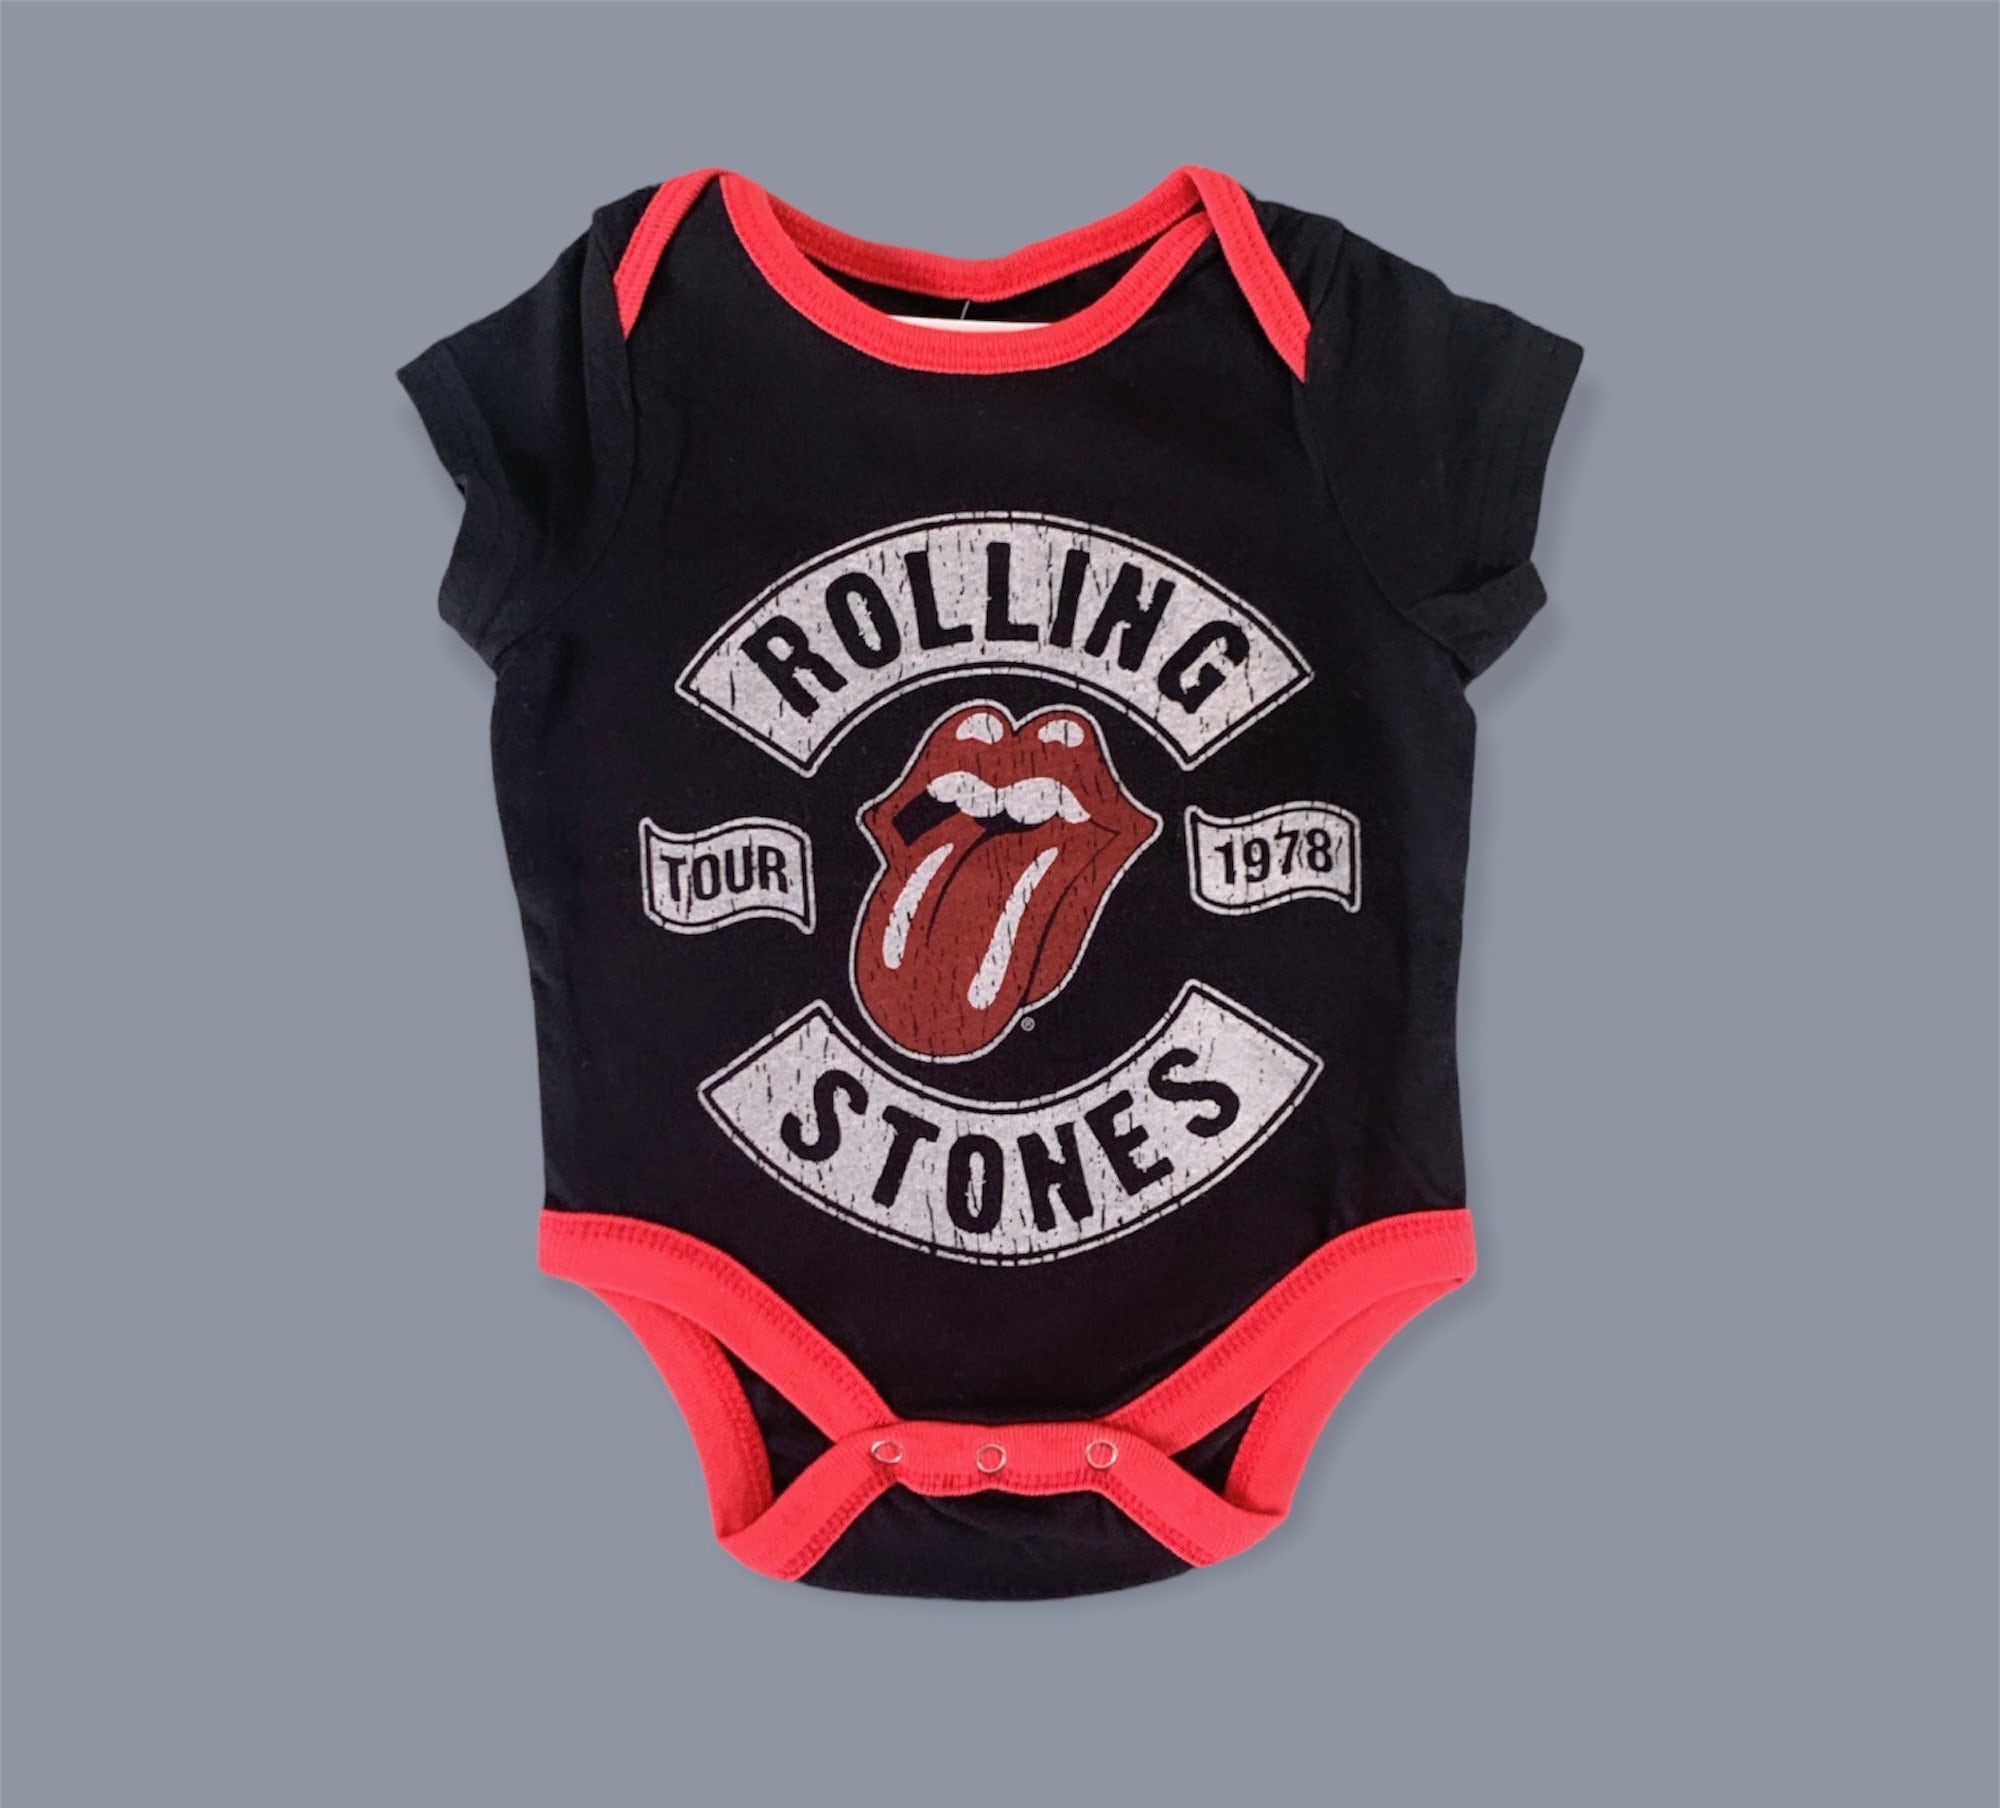 Rolling stones baby